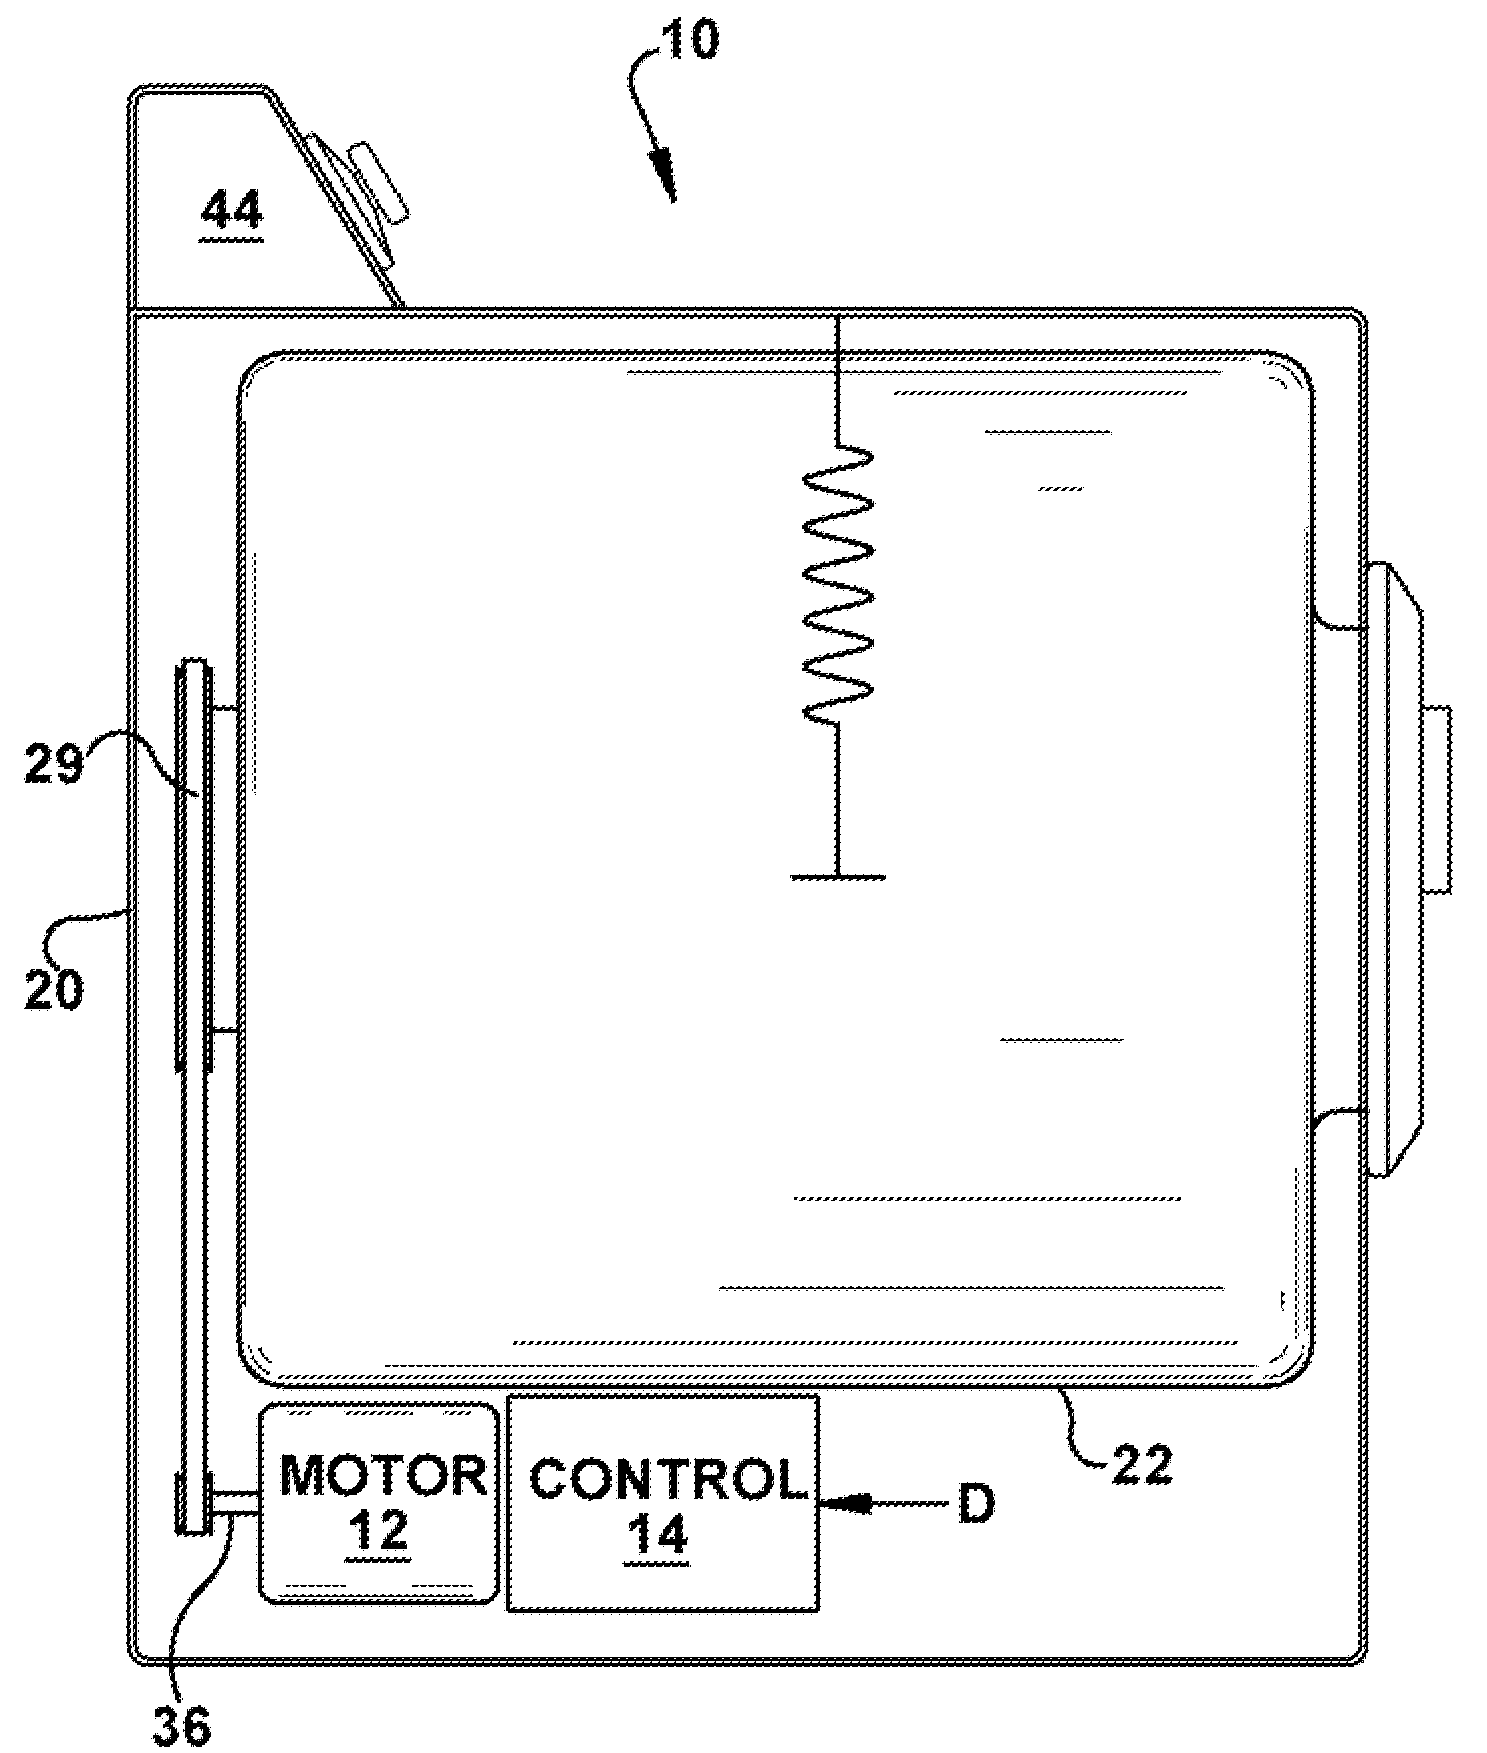 Motor apparatus and method